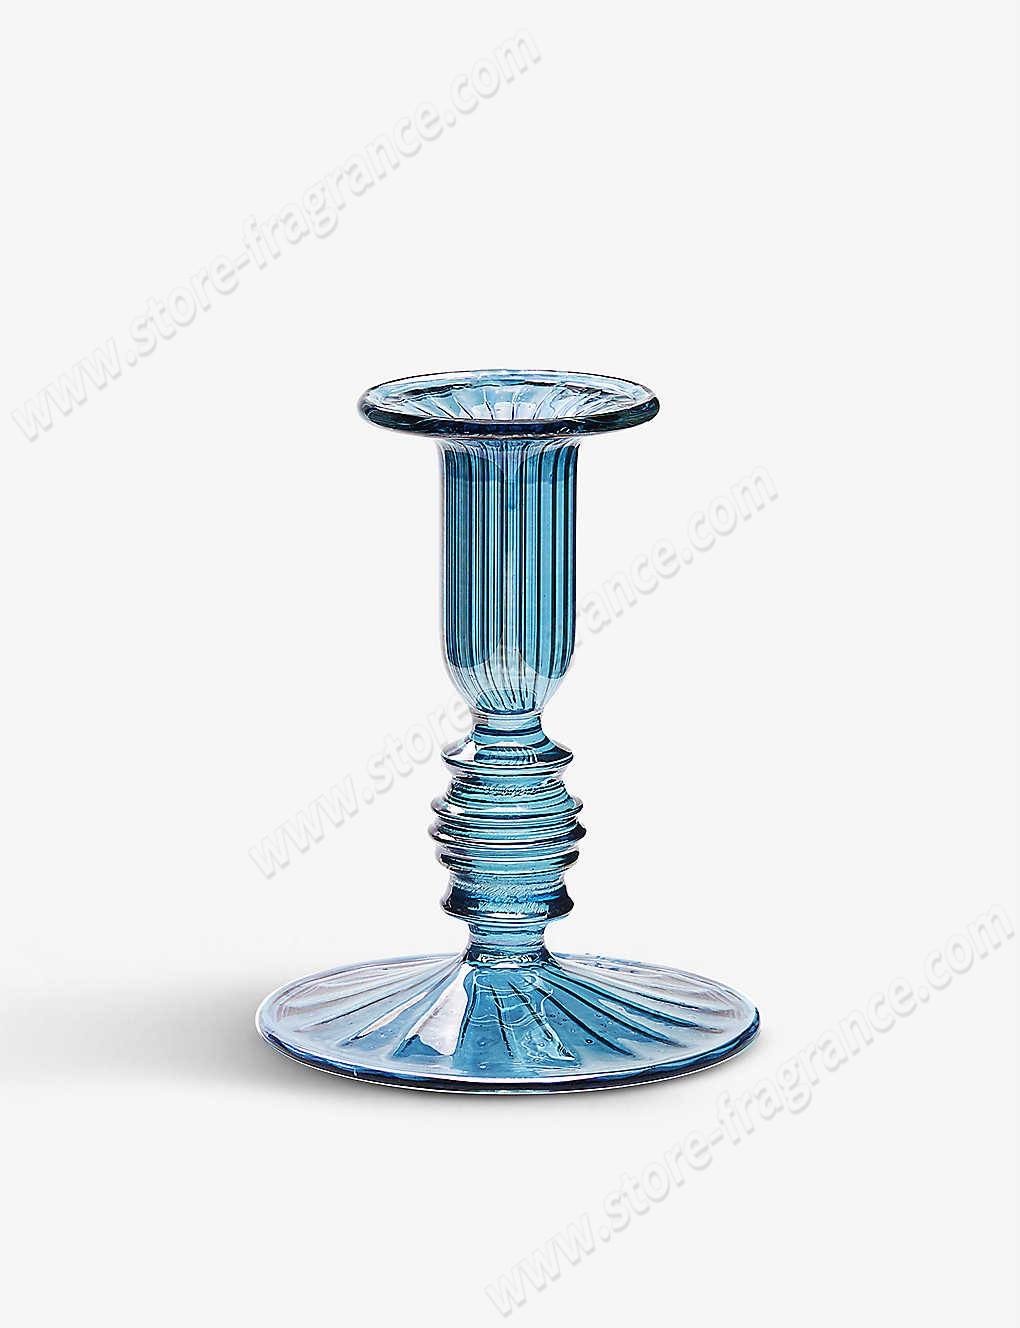 ANNA + NINA/Ocean glass candle holder 11cm ✿ Discount Store - ANNA + NINA/Ocean glass candle holder 11cm ✿ Discount Store